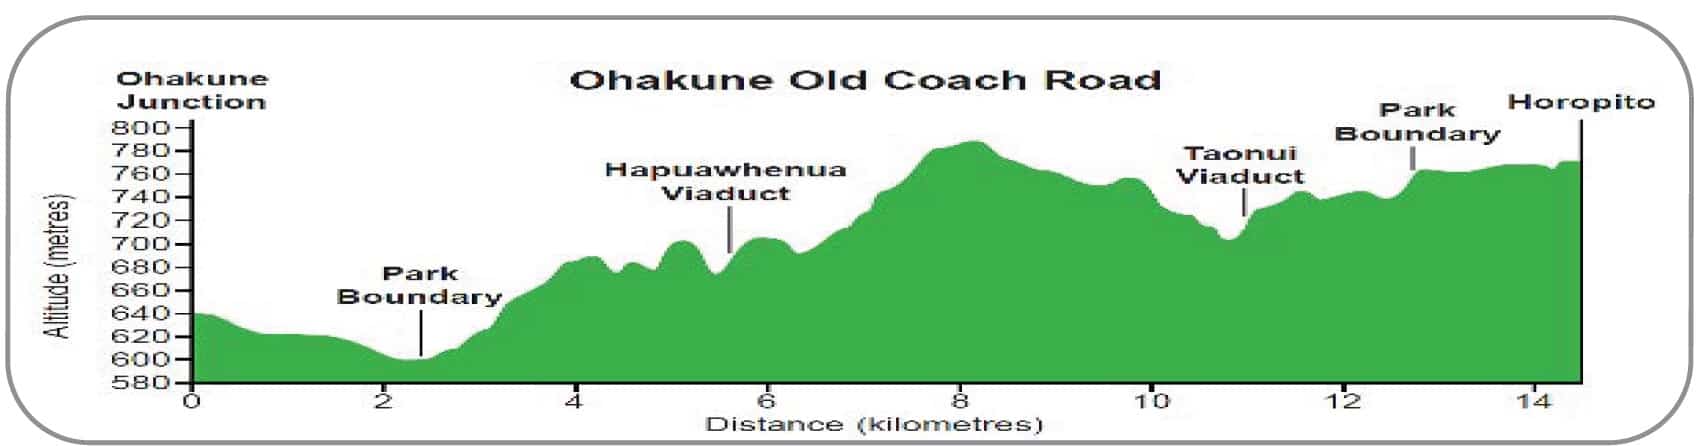 Ohakune Old Coach Road 